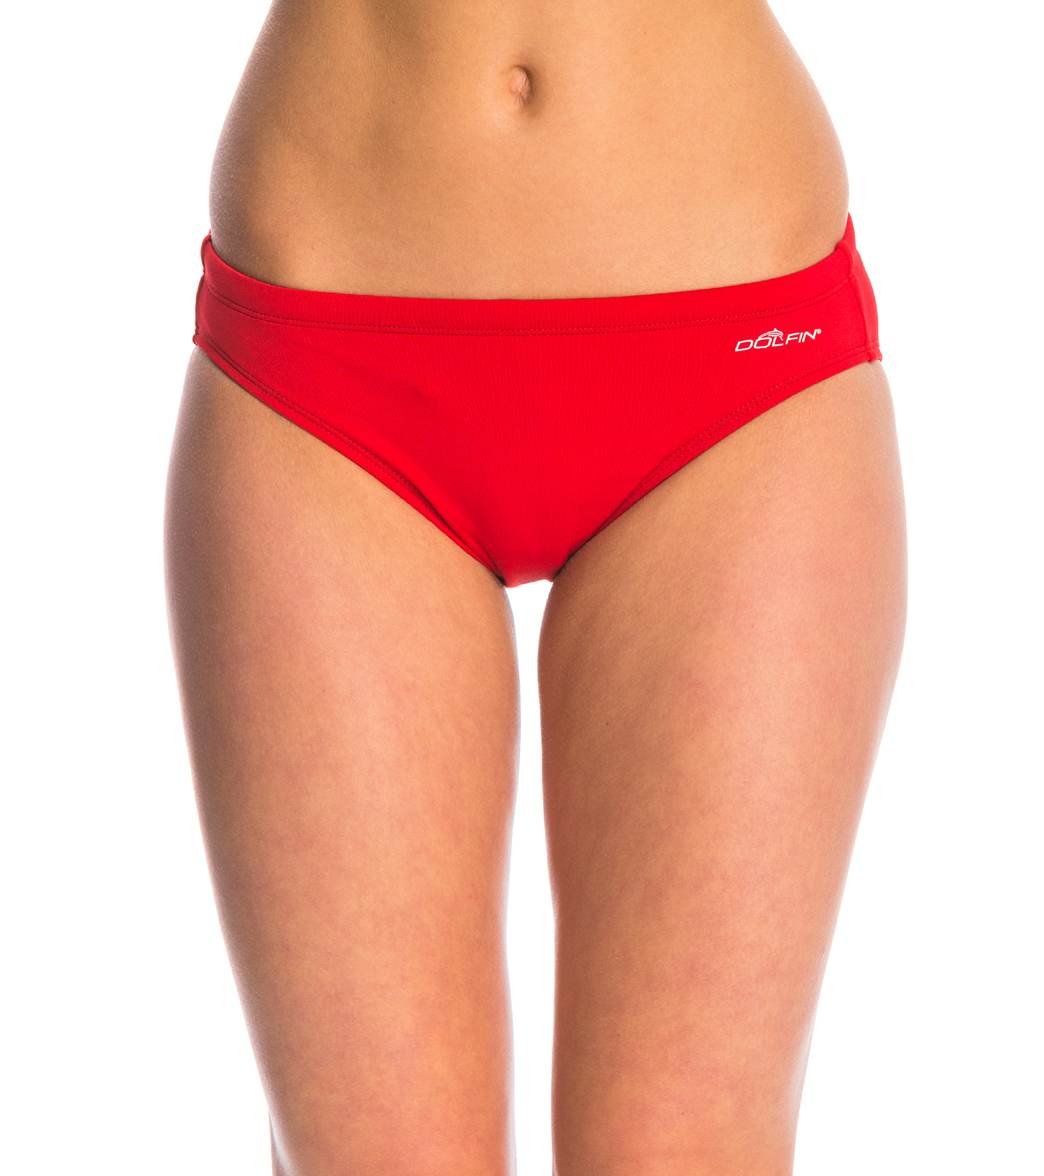 Dolfin Lifeguard Bikini Bottom Swimsuit - Red X-Small Polyester - Swimoutlet.com